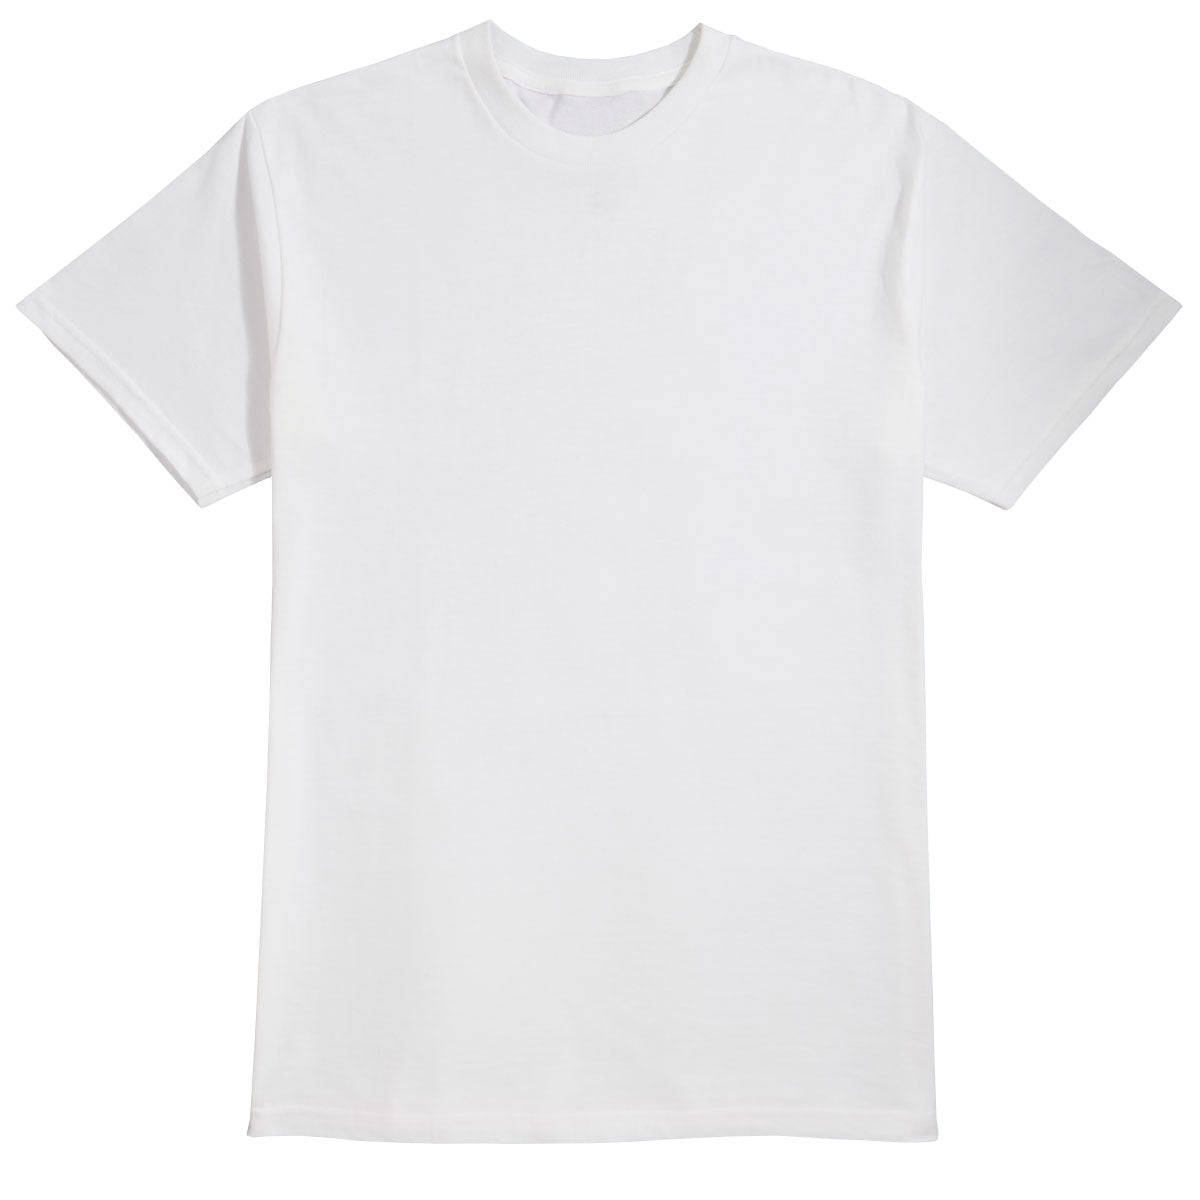 Converse Flash Sheet T-Shirt - White - SM image 1